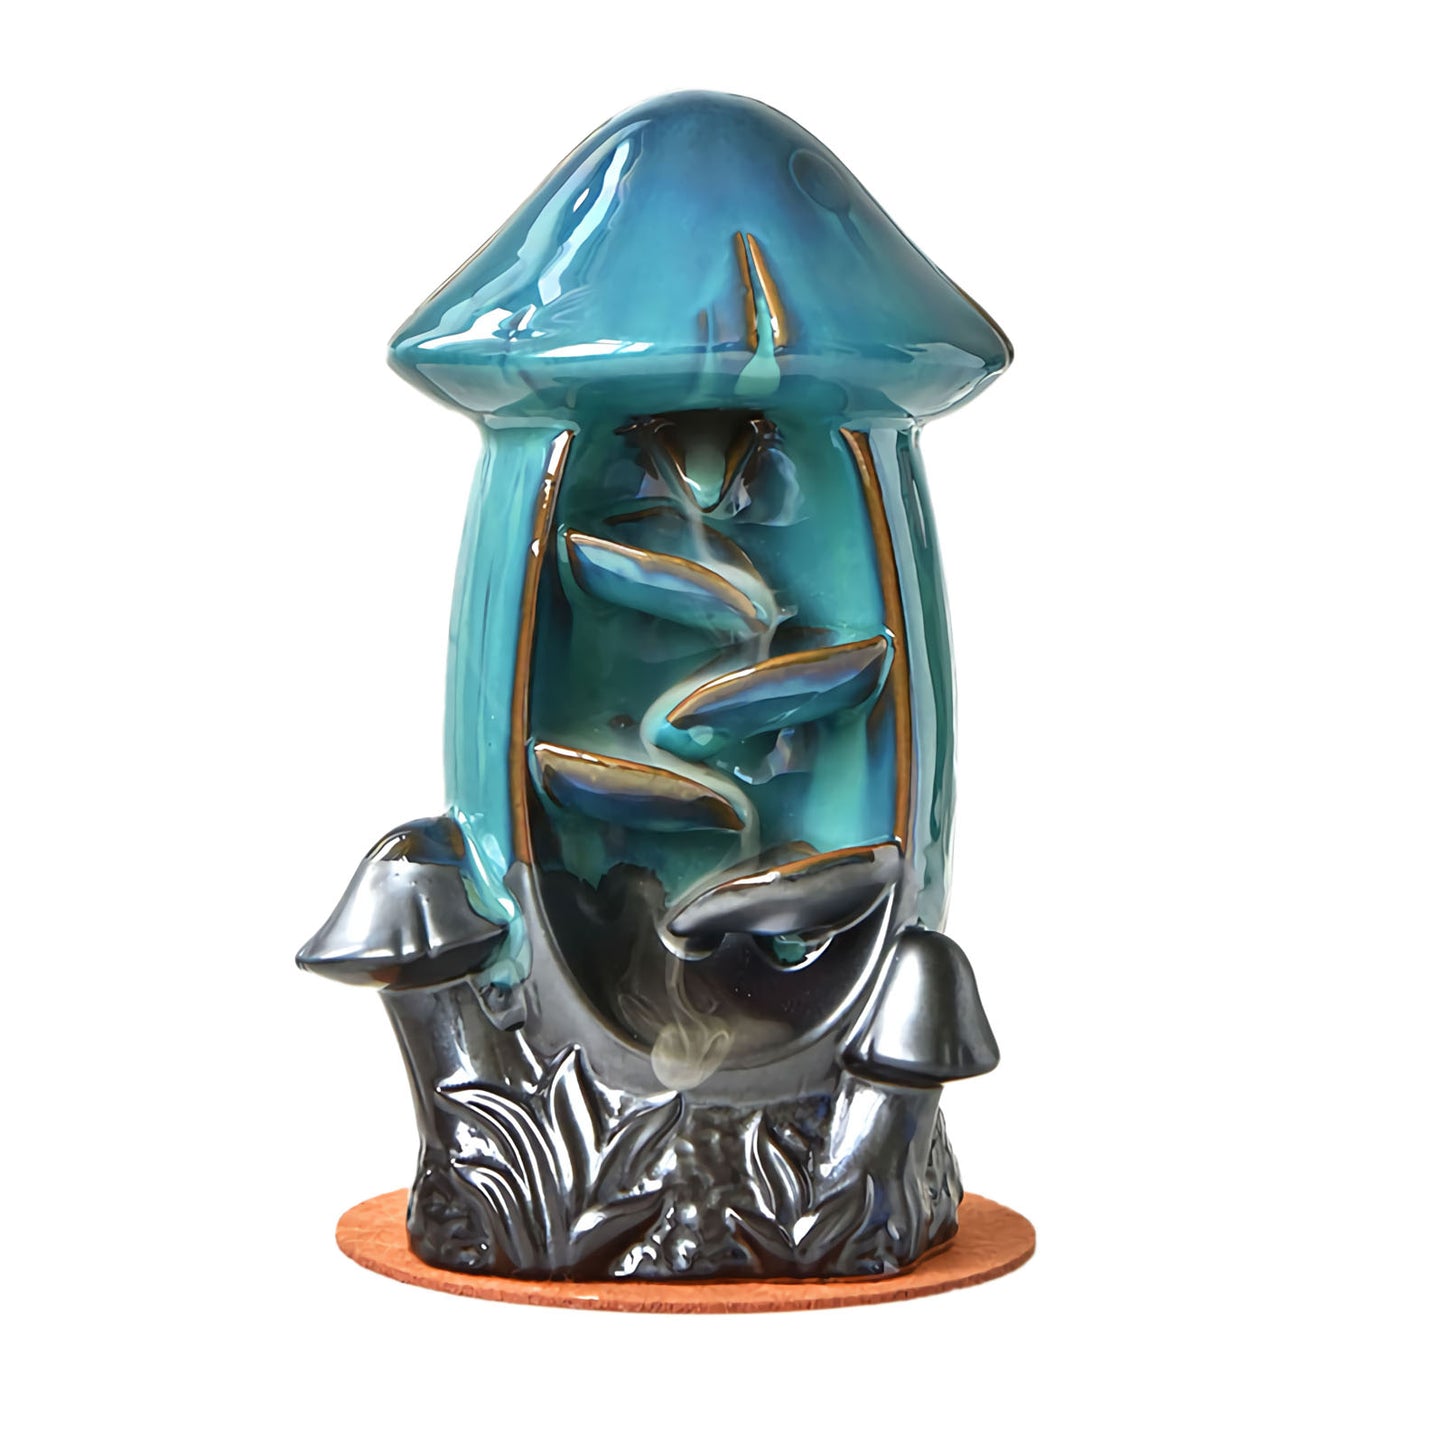 Mushroom Backflow Incense Burner Ceramic with Blue Glaze - 11.5x10.5x19.5cm - NEW424